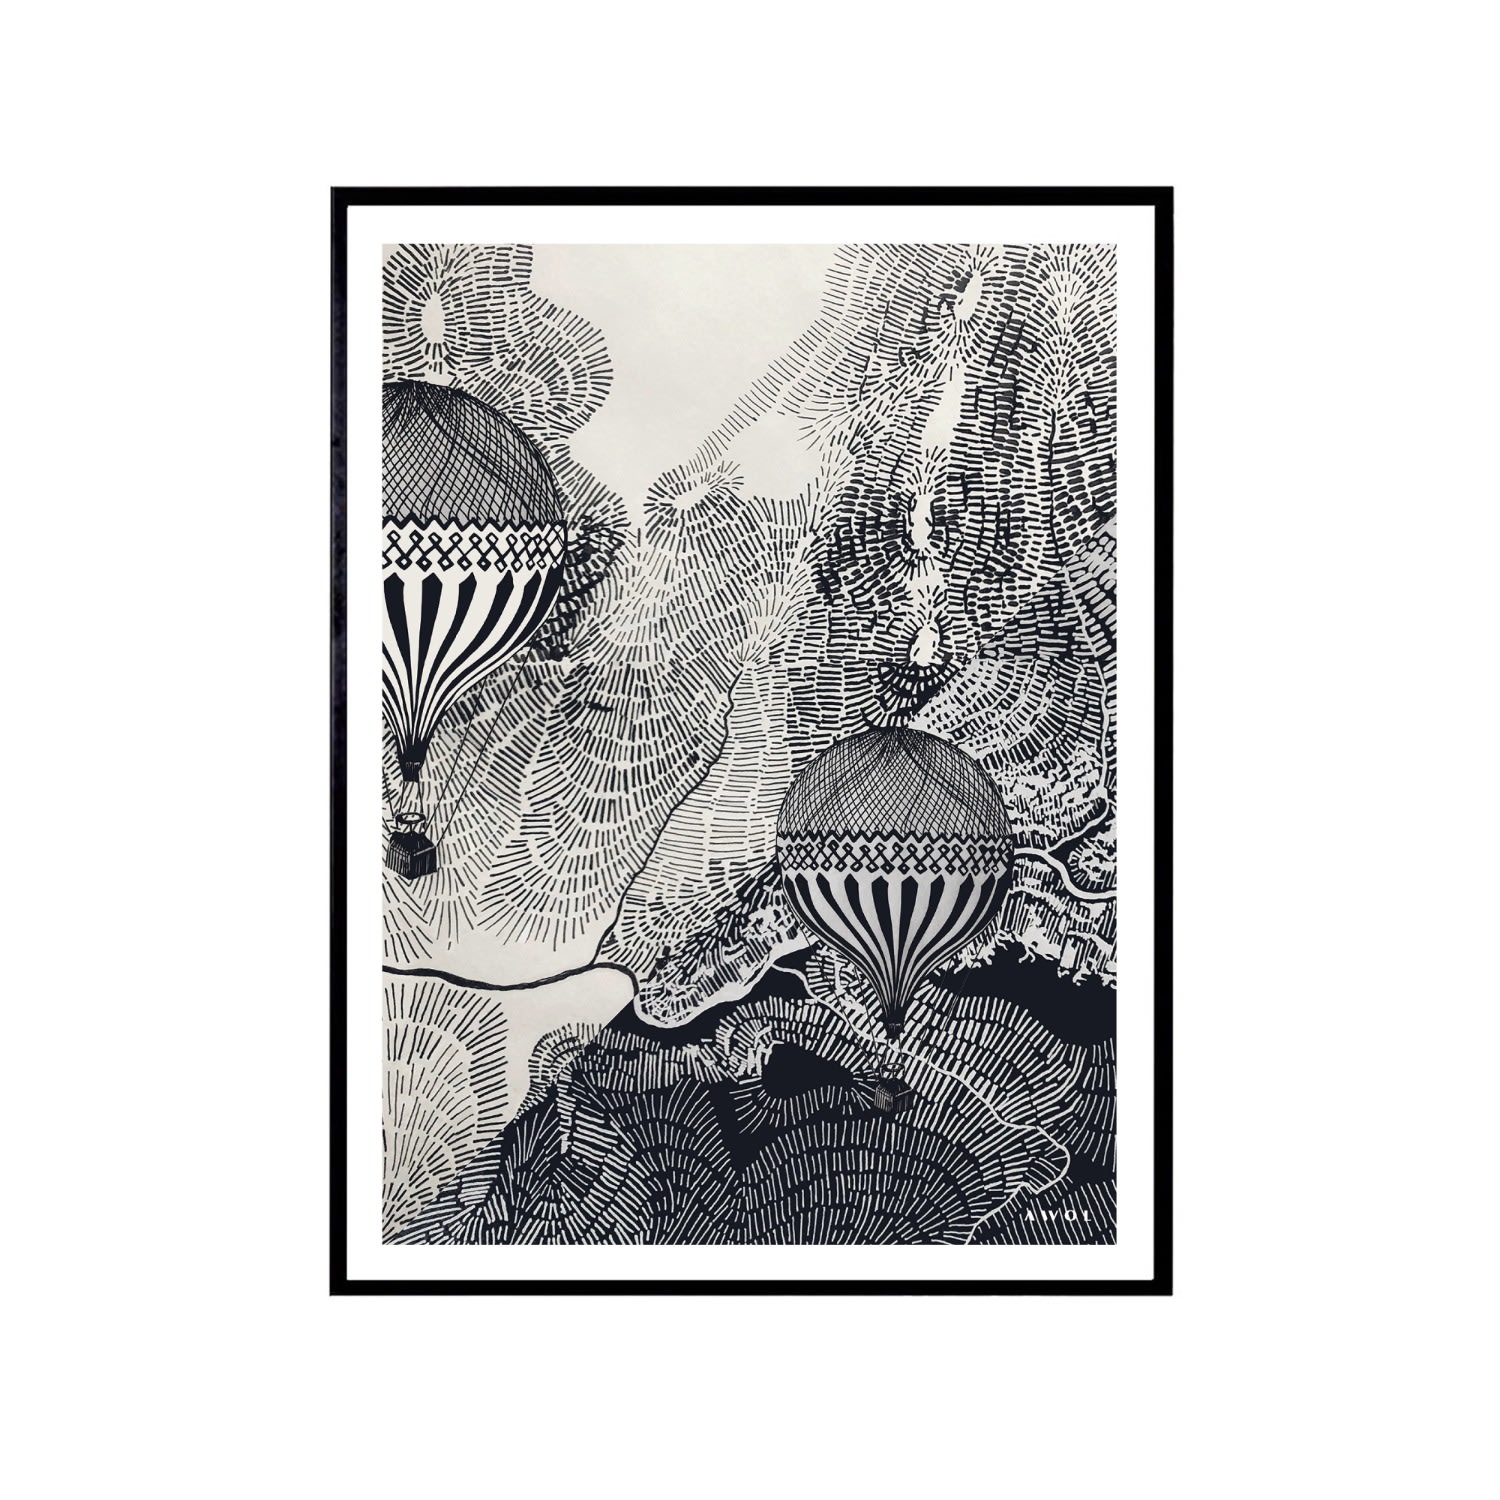 Neutrals / Black / White The Dreamer: Hot Air Balloons In The Sky Art Print Awol